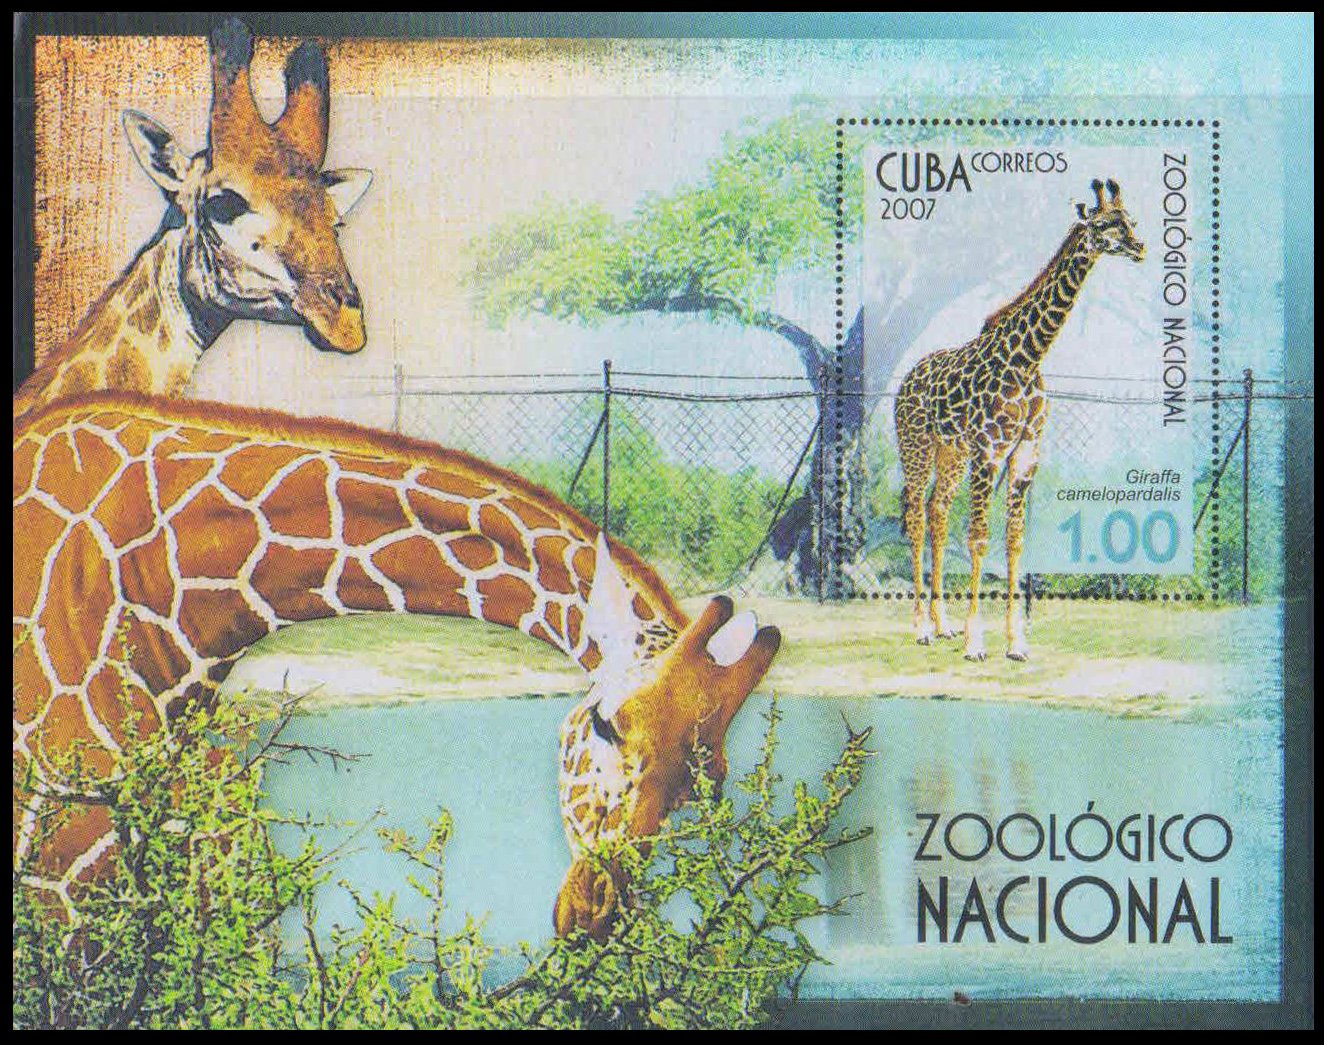 CUBA 2007-Giraffe, National Zoo, M/S, MNH, S.G. MS 5048